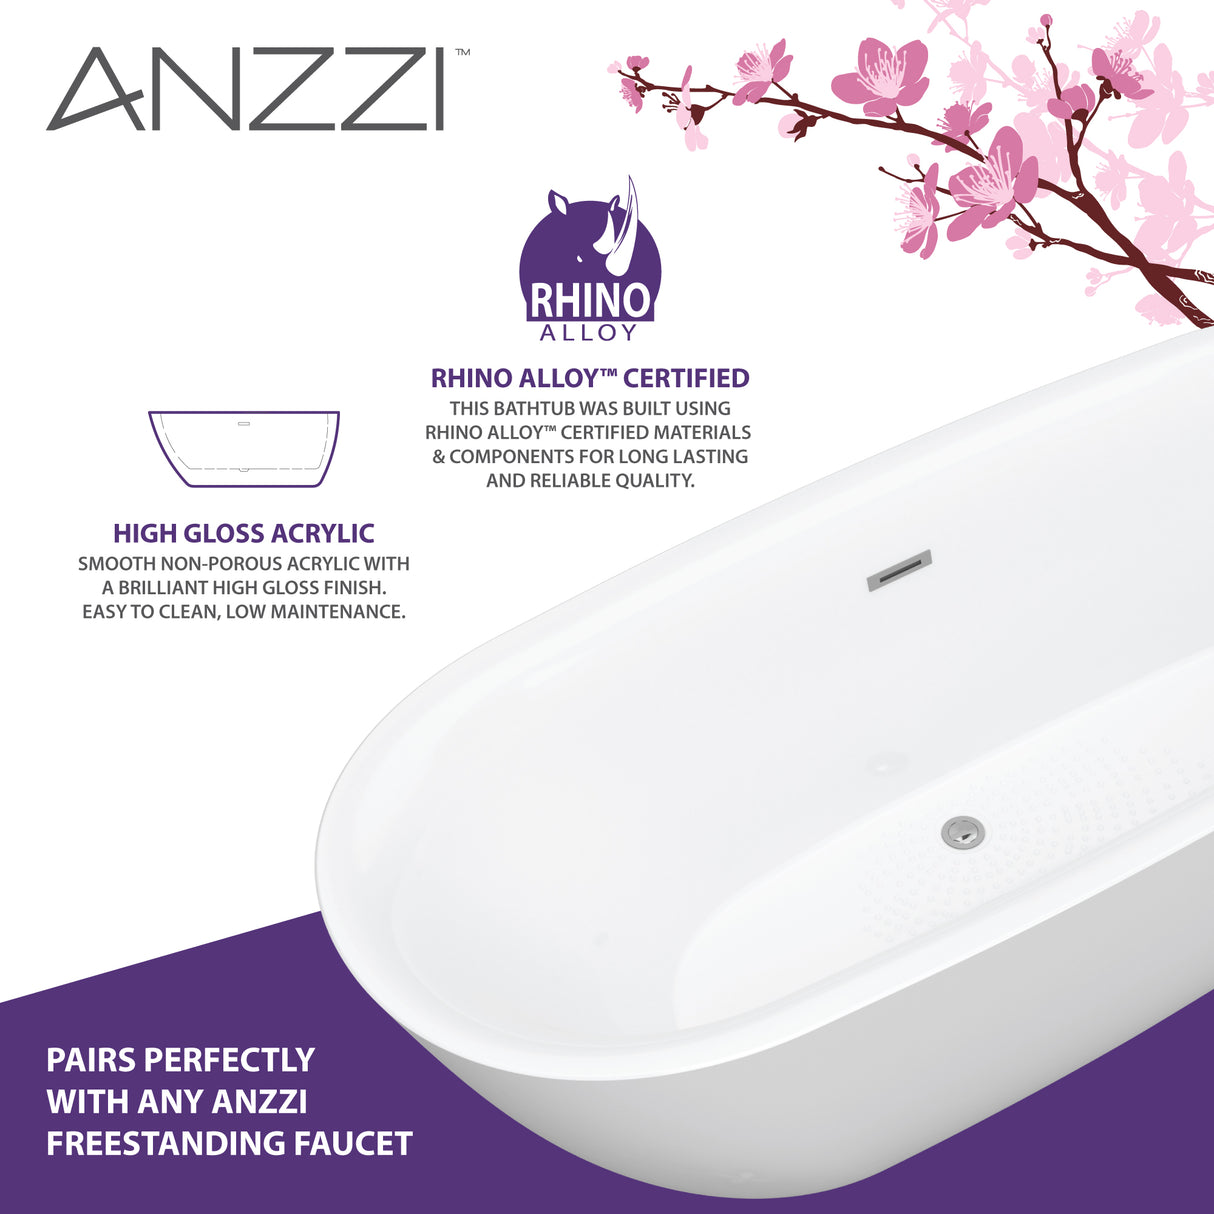 ANZZI FT-AZ411-59 Britt 59 in. Acrylic Flatbottom Freestanding Bathtub in White